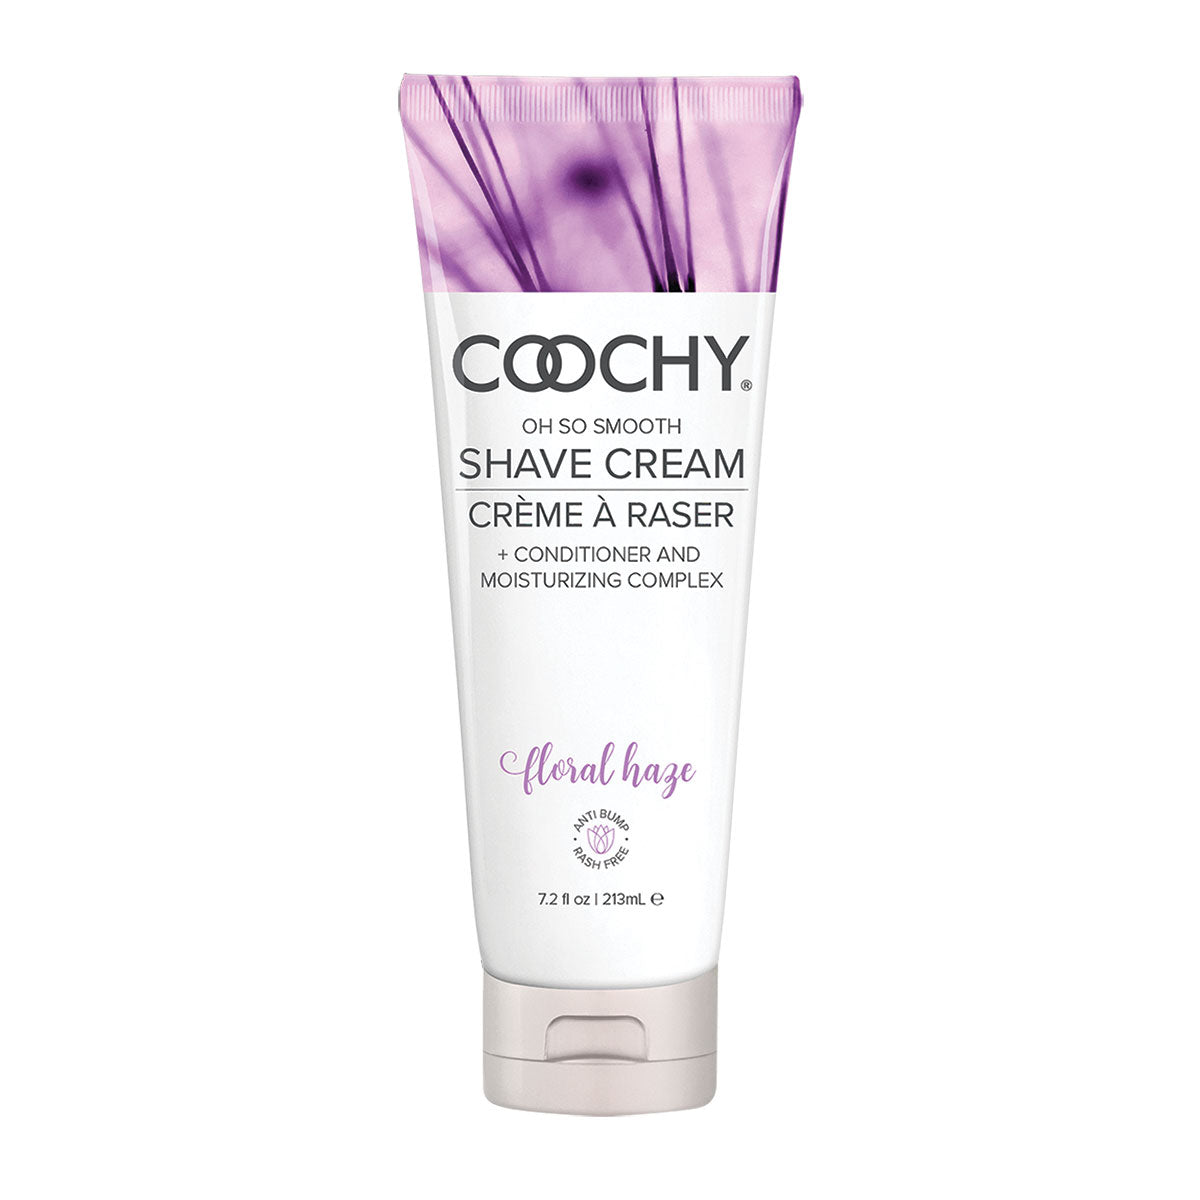 Coochy Shave Cream 7.2oz - Floral Haze